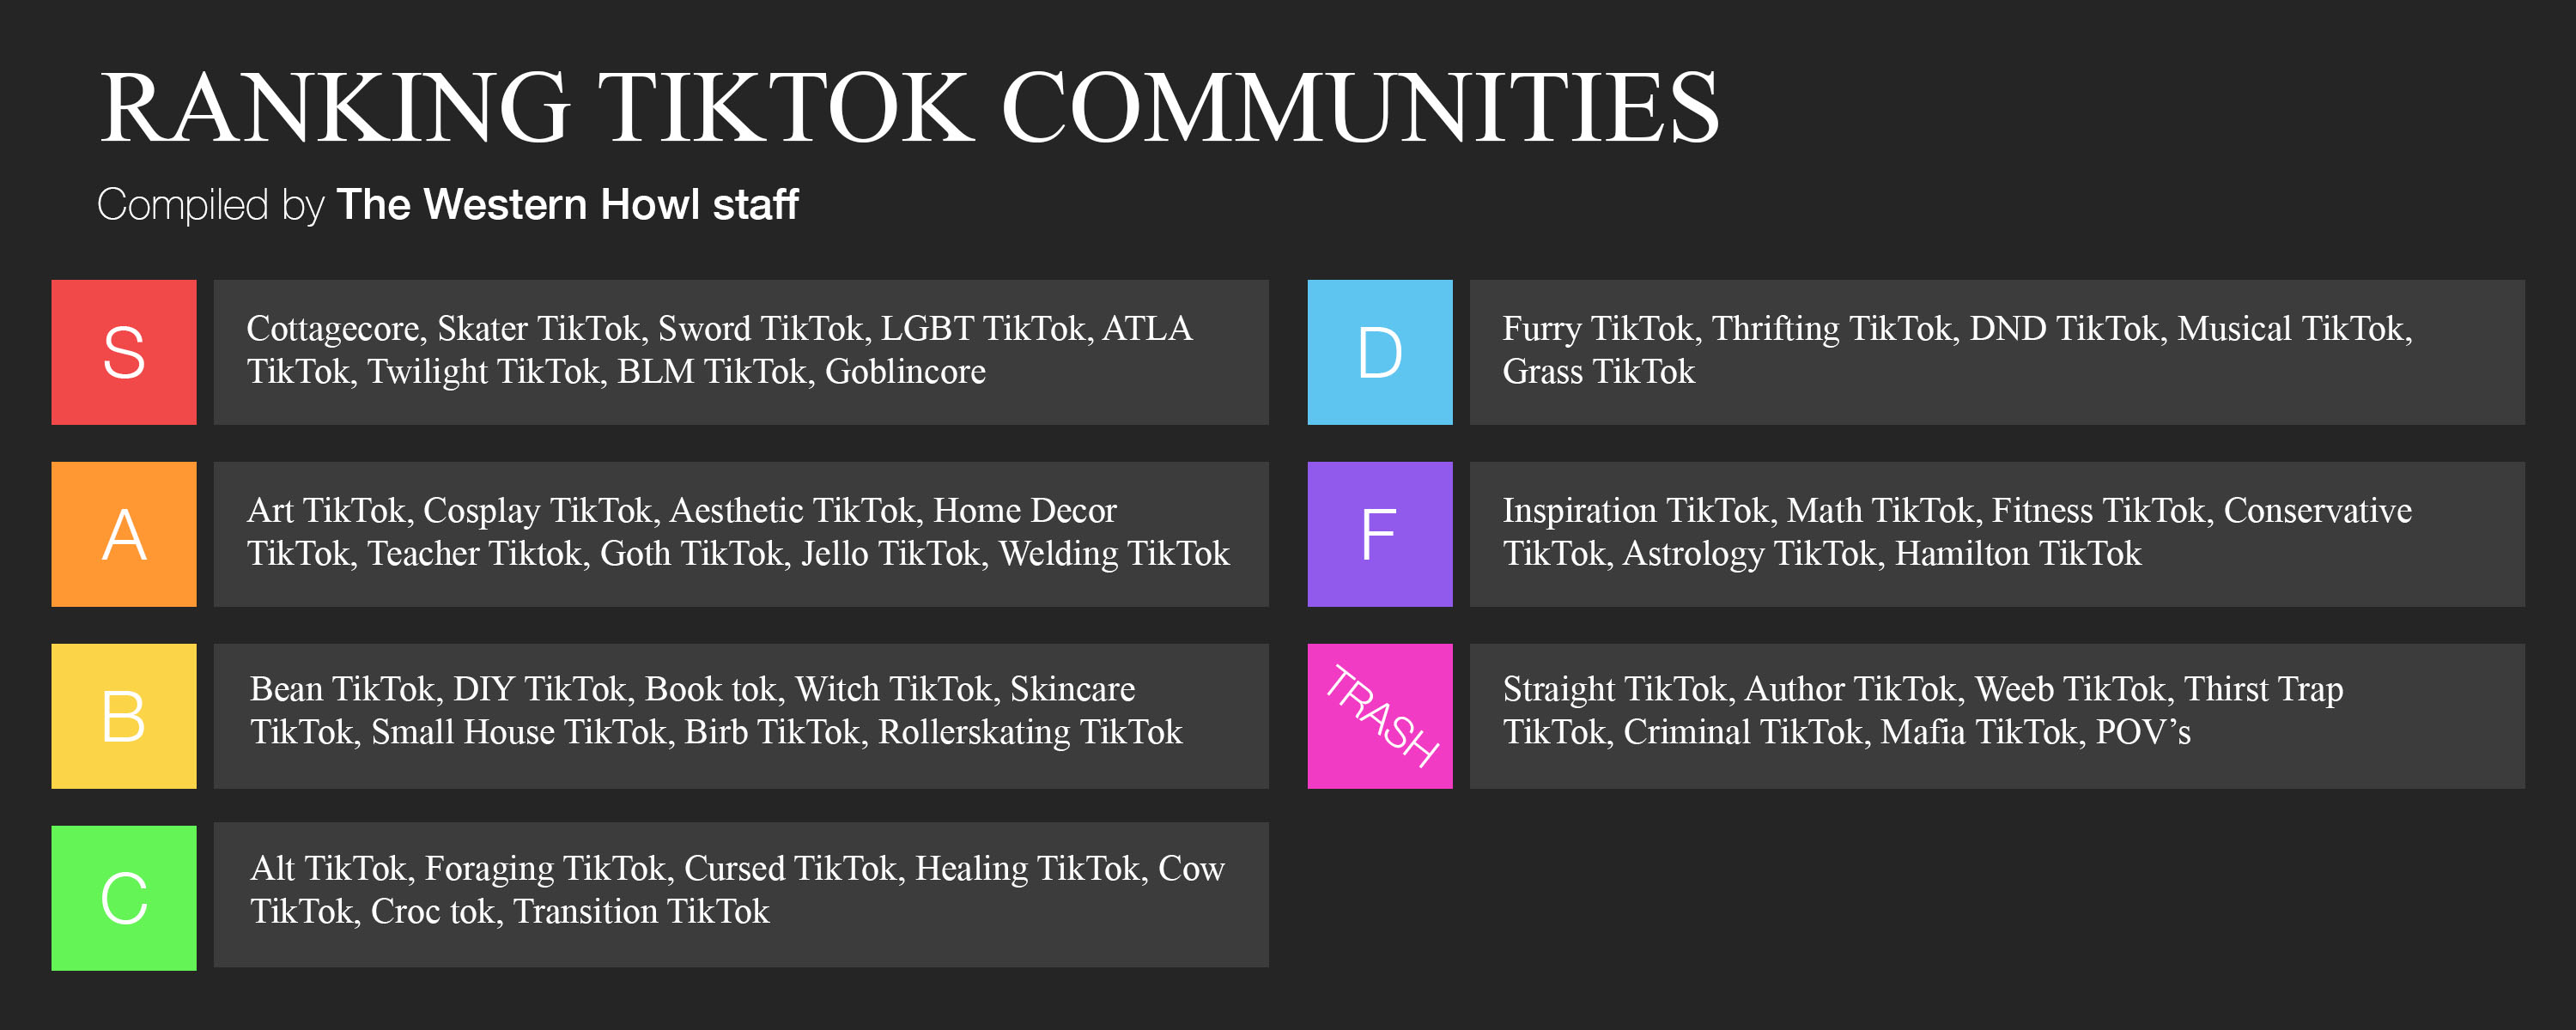 Ranking TikTok Communities